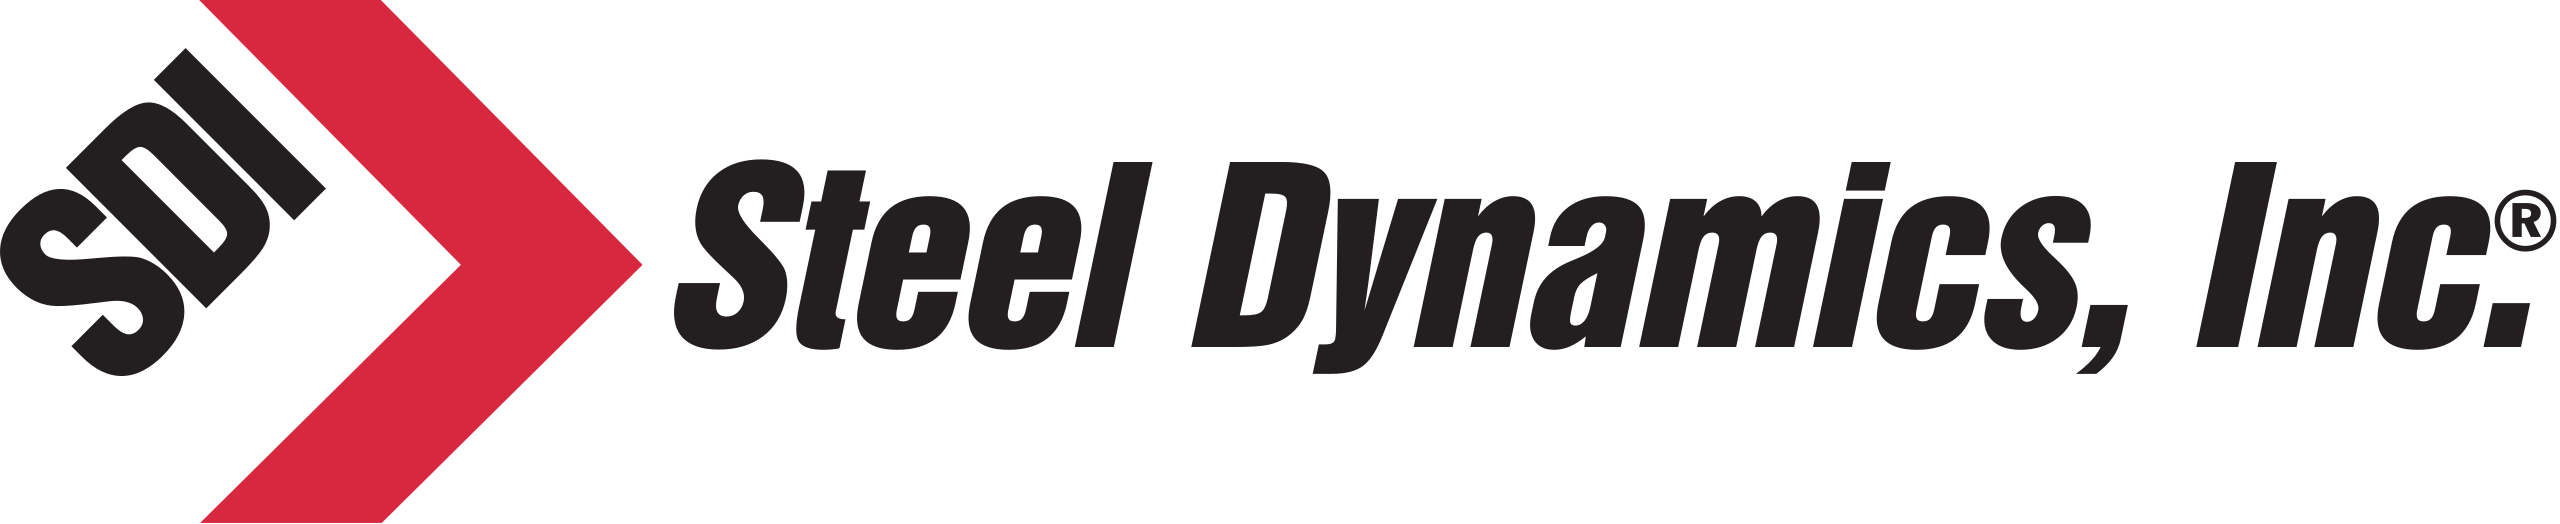 Steel Dynamics, inc. Logo